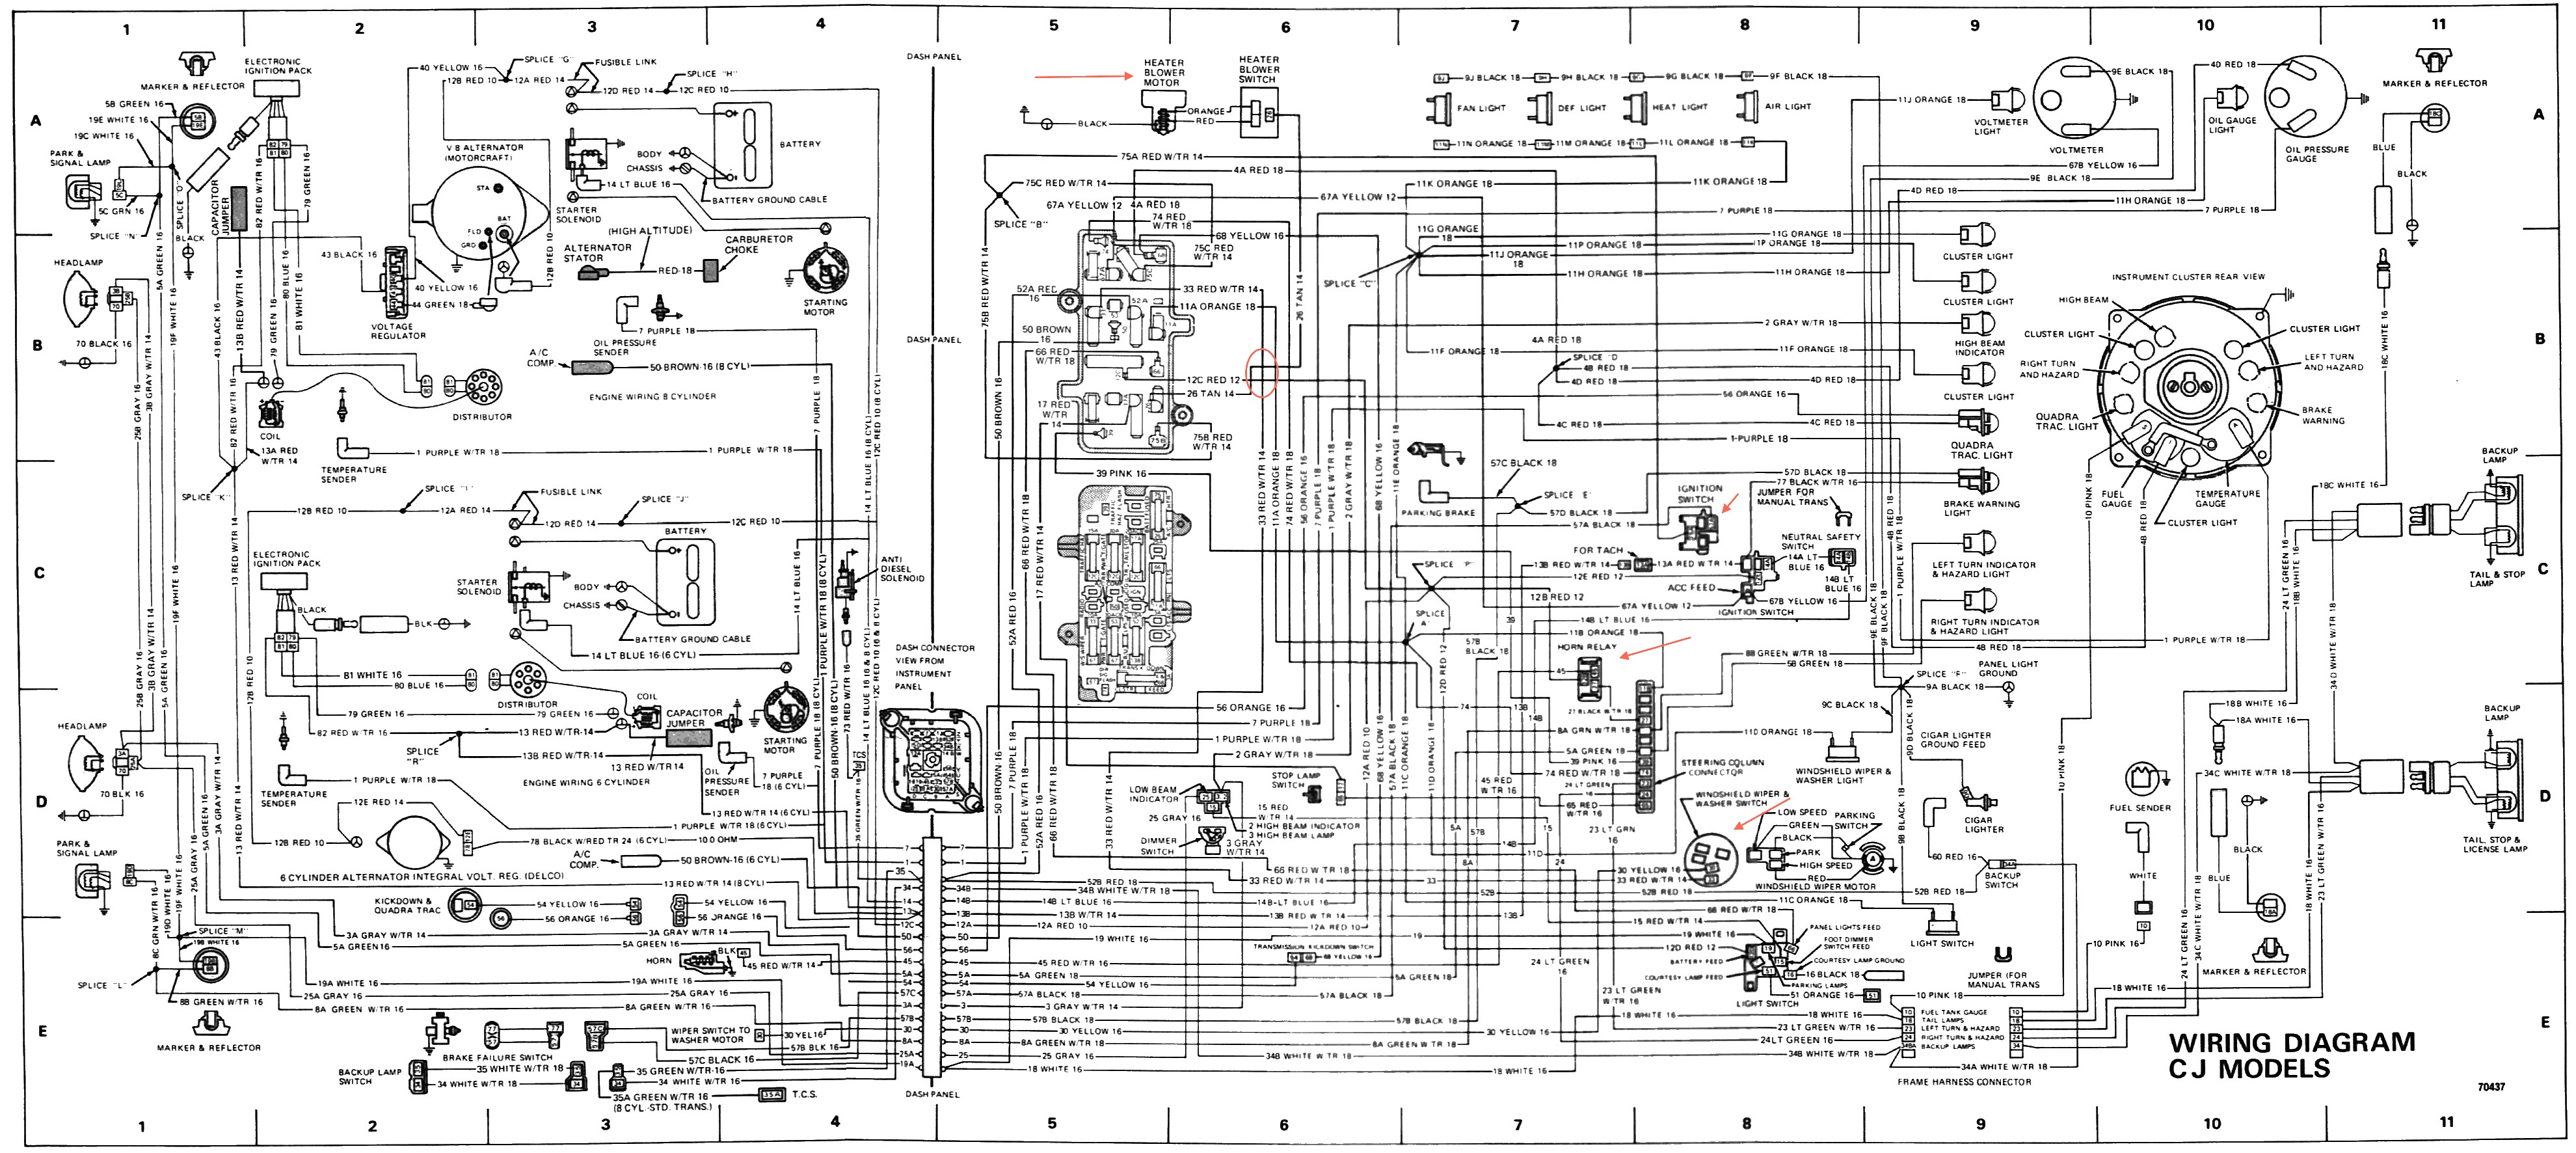 jeep wiring diagram 1975 cj5 - Wiring Diagram and Schematic